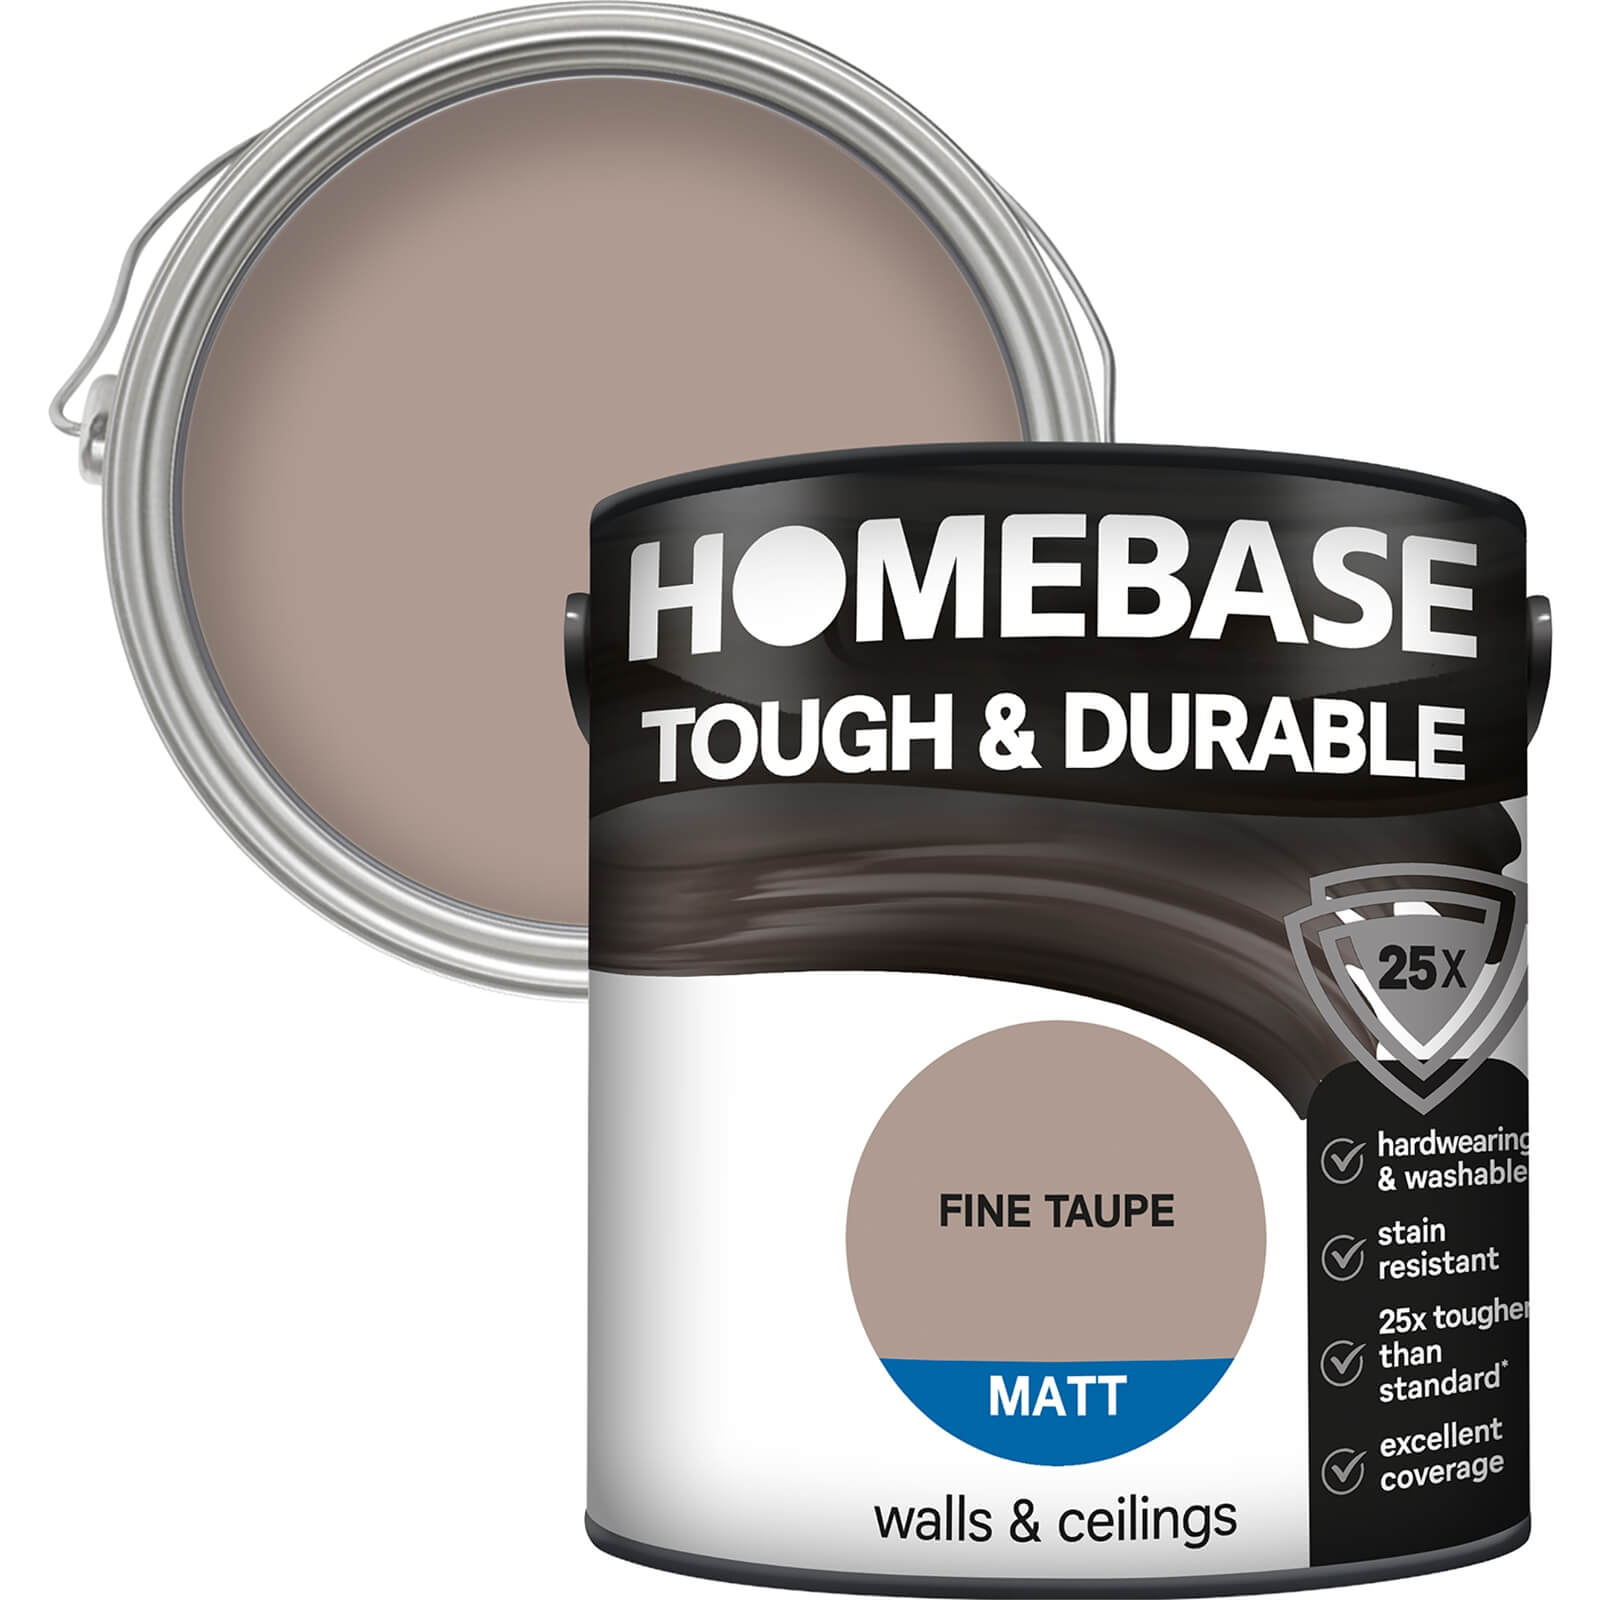 Homebase Tough & Durable Matt Paint Fine Taupe - 2.5L